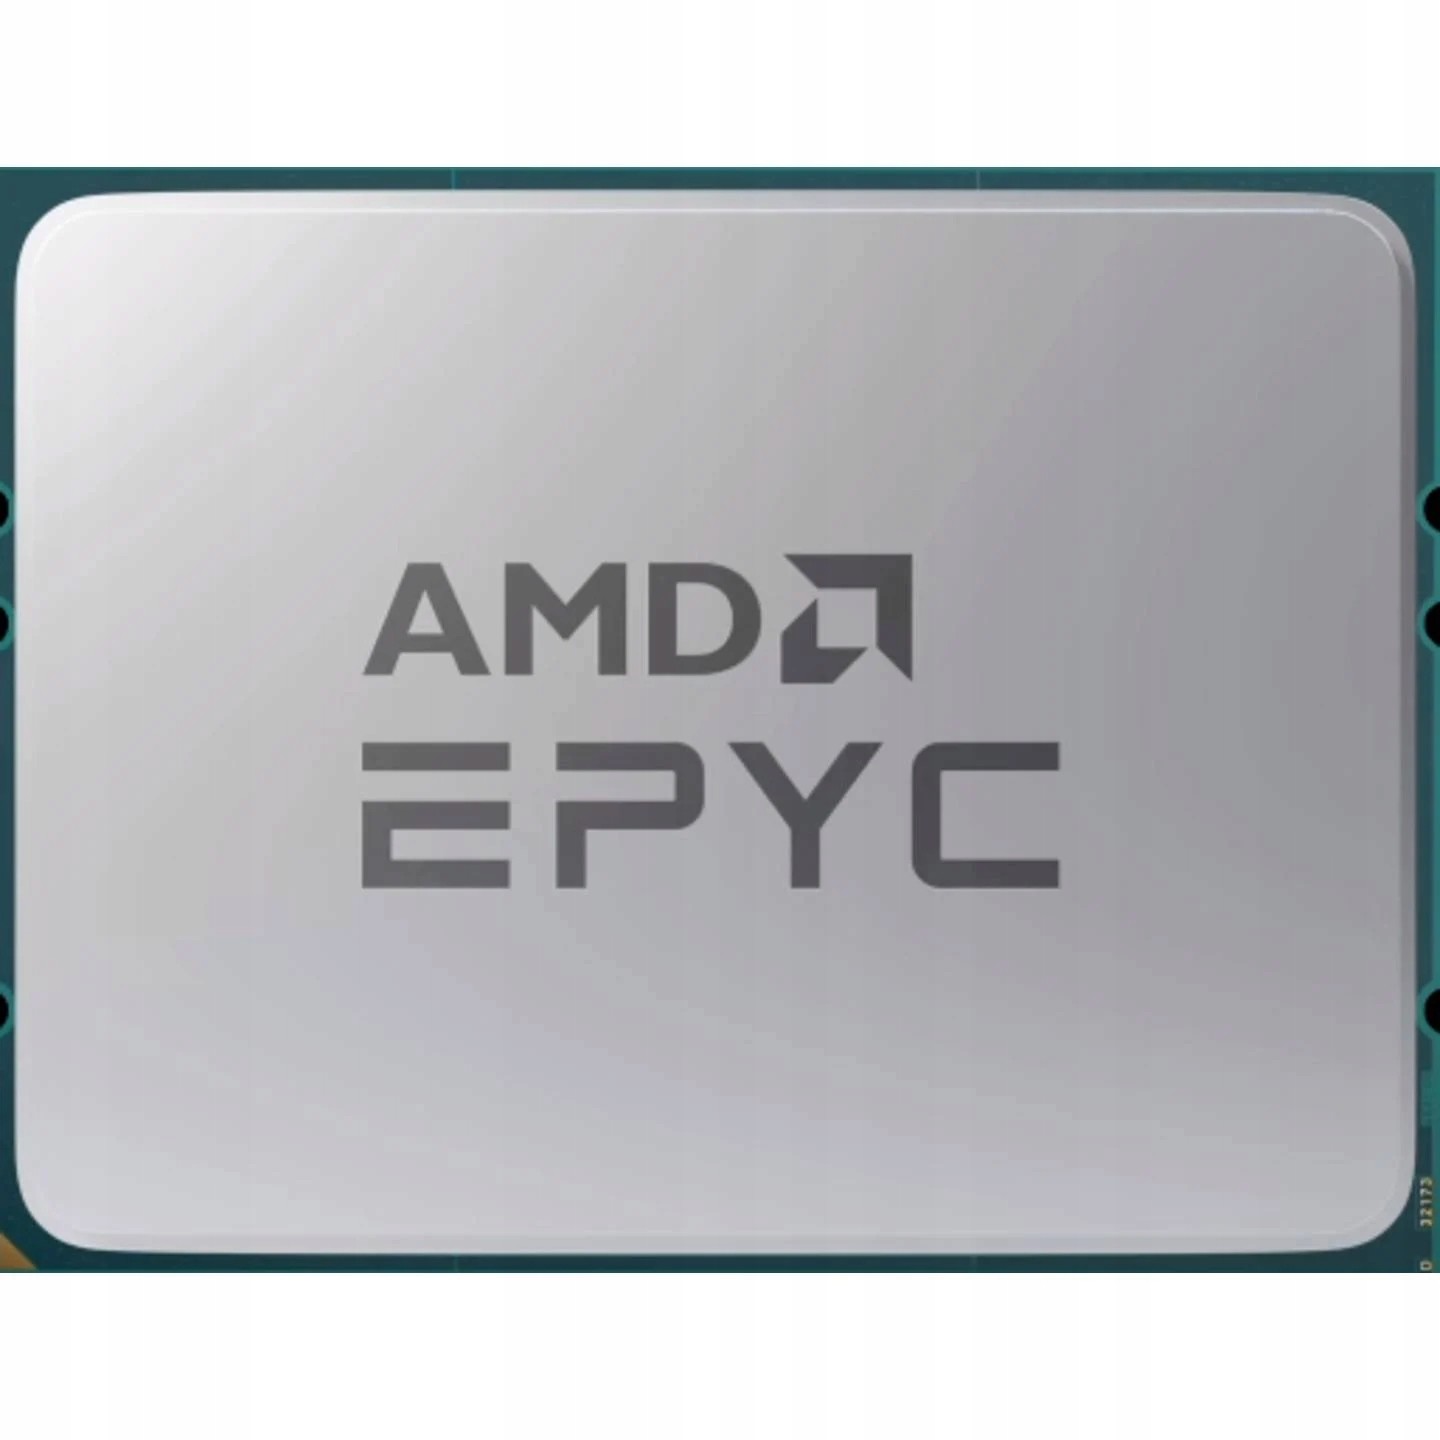 Amd Cpu Epyc 7004 Series 48C96T model 9454 (2.753.8 GHz Max Boost, 256MB, 2